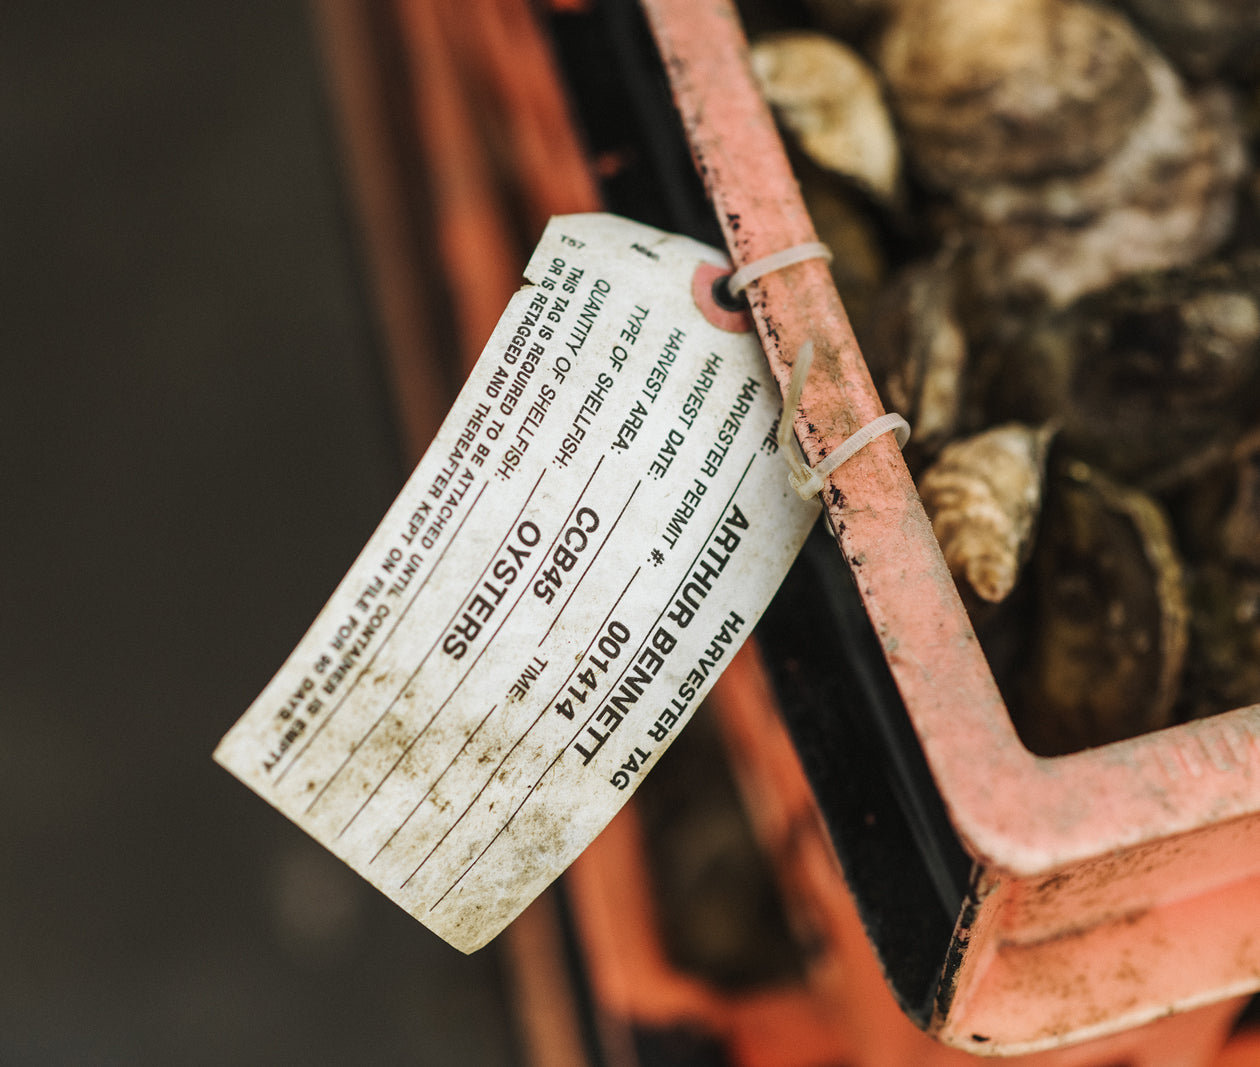 Mr. Bill's Oysters from Saquish, MA